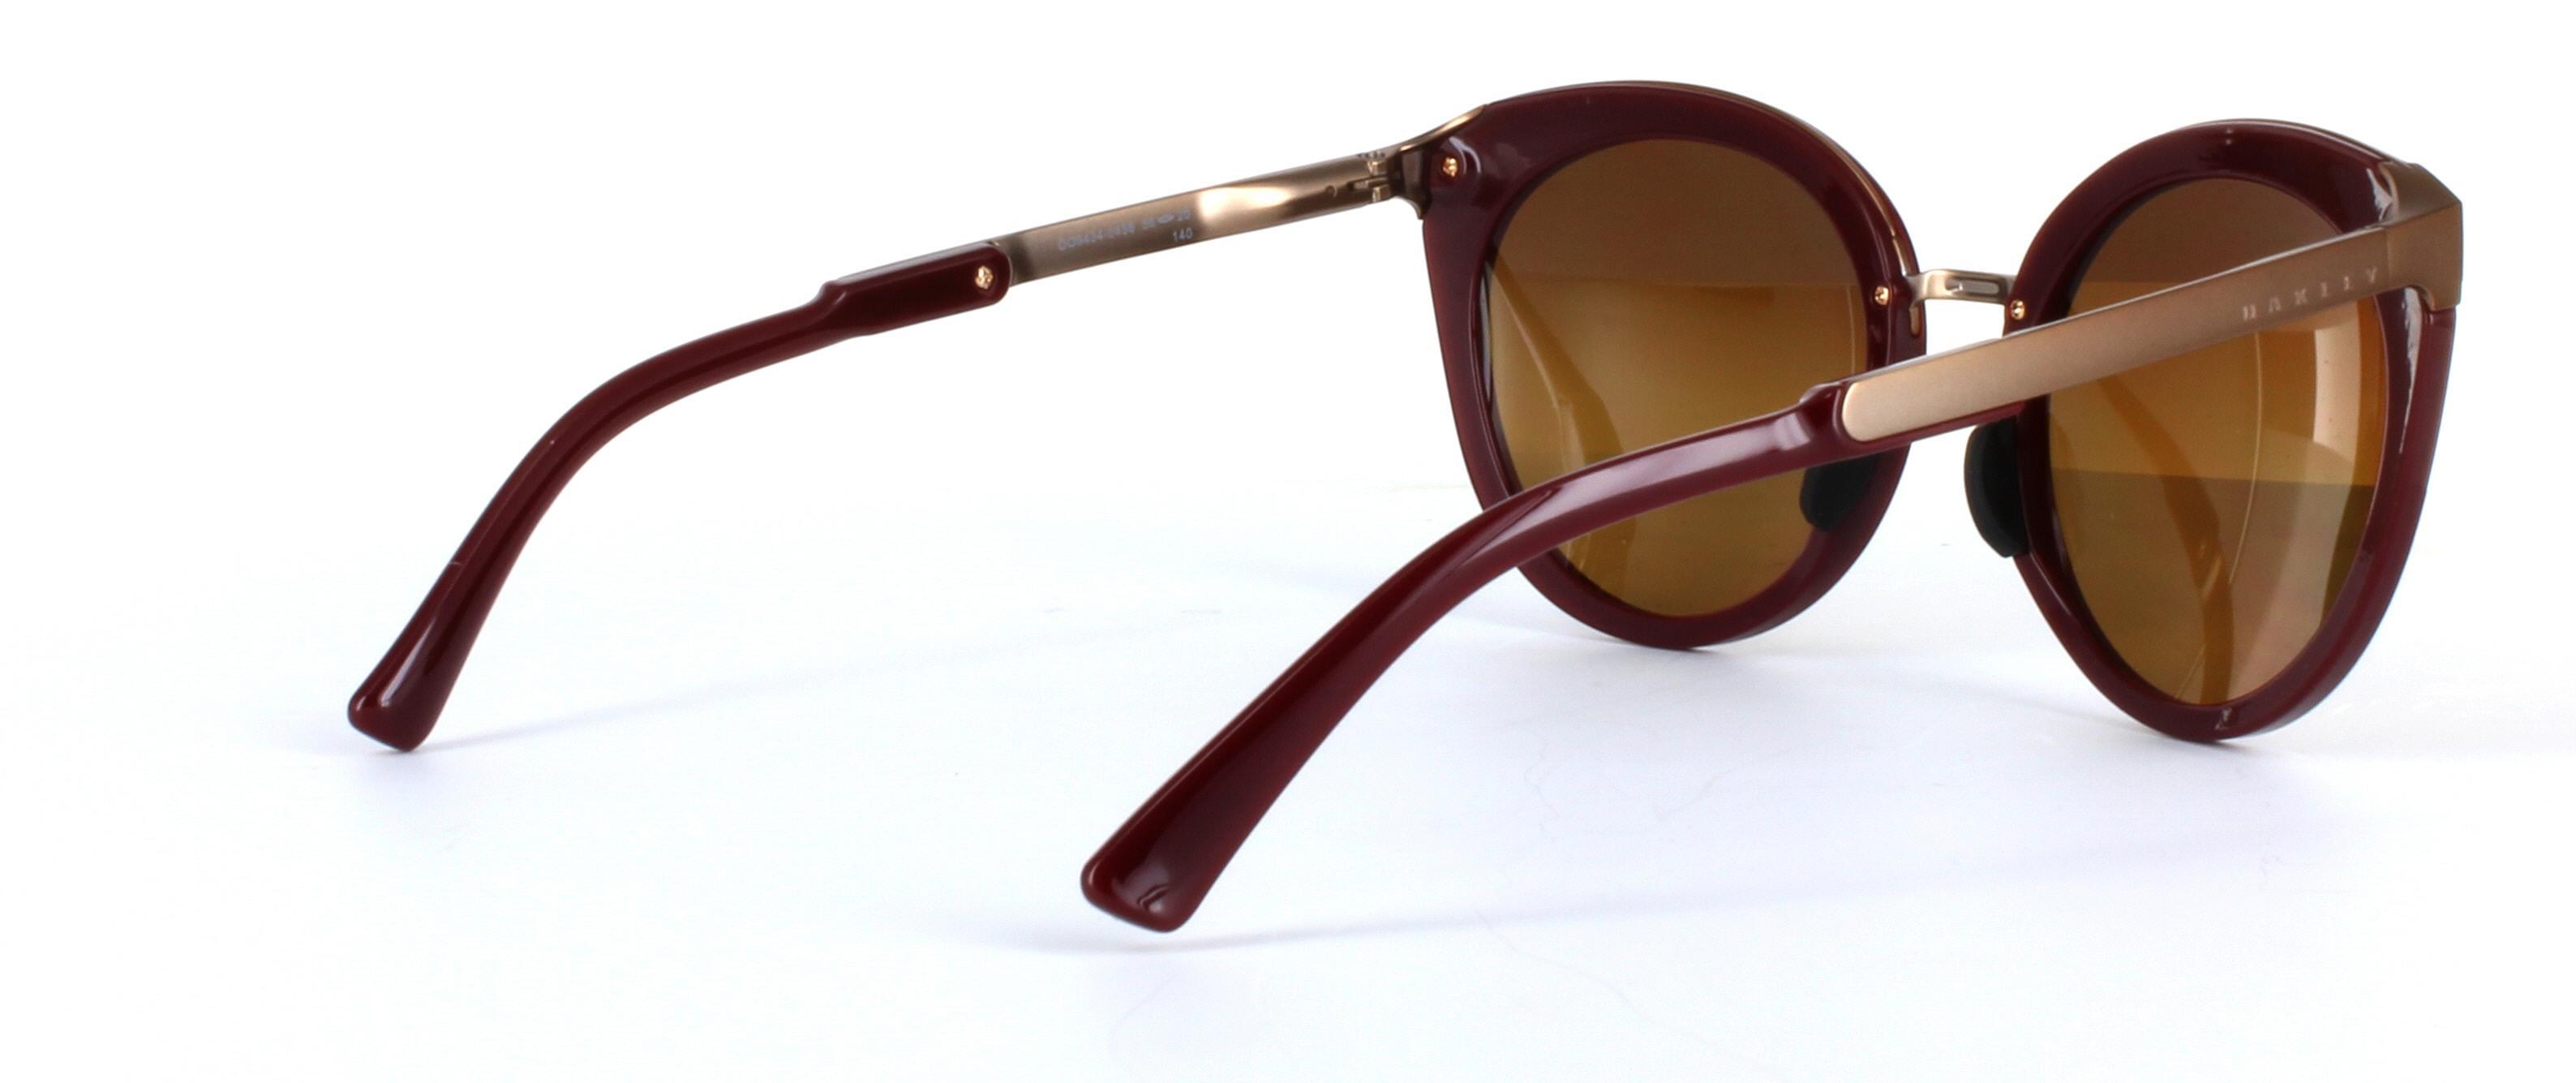 Oakley (O9434) Burgundy Full Rim Plastic Sunglasses - Image View 4